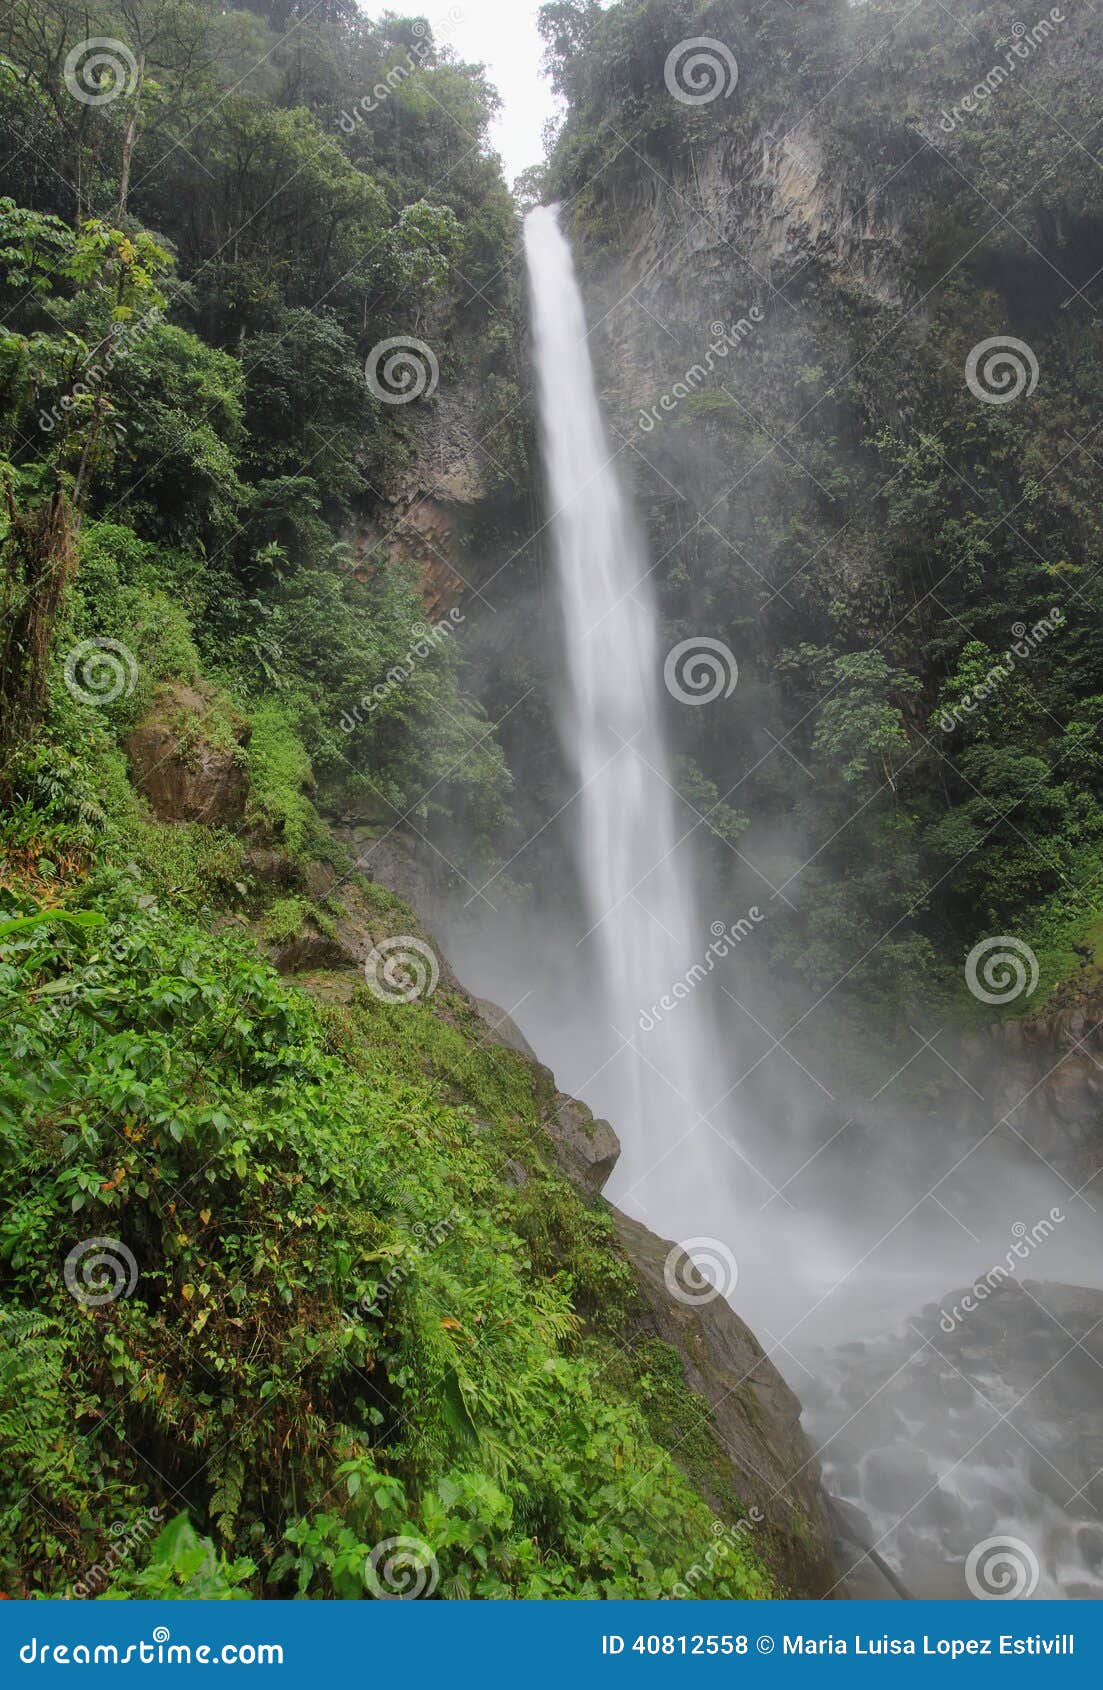 machay waterfall (known aswell as el rocio waterfall)